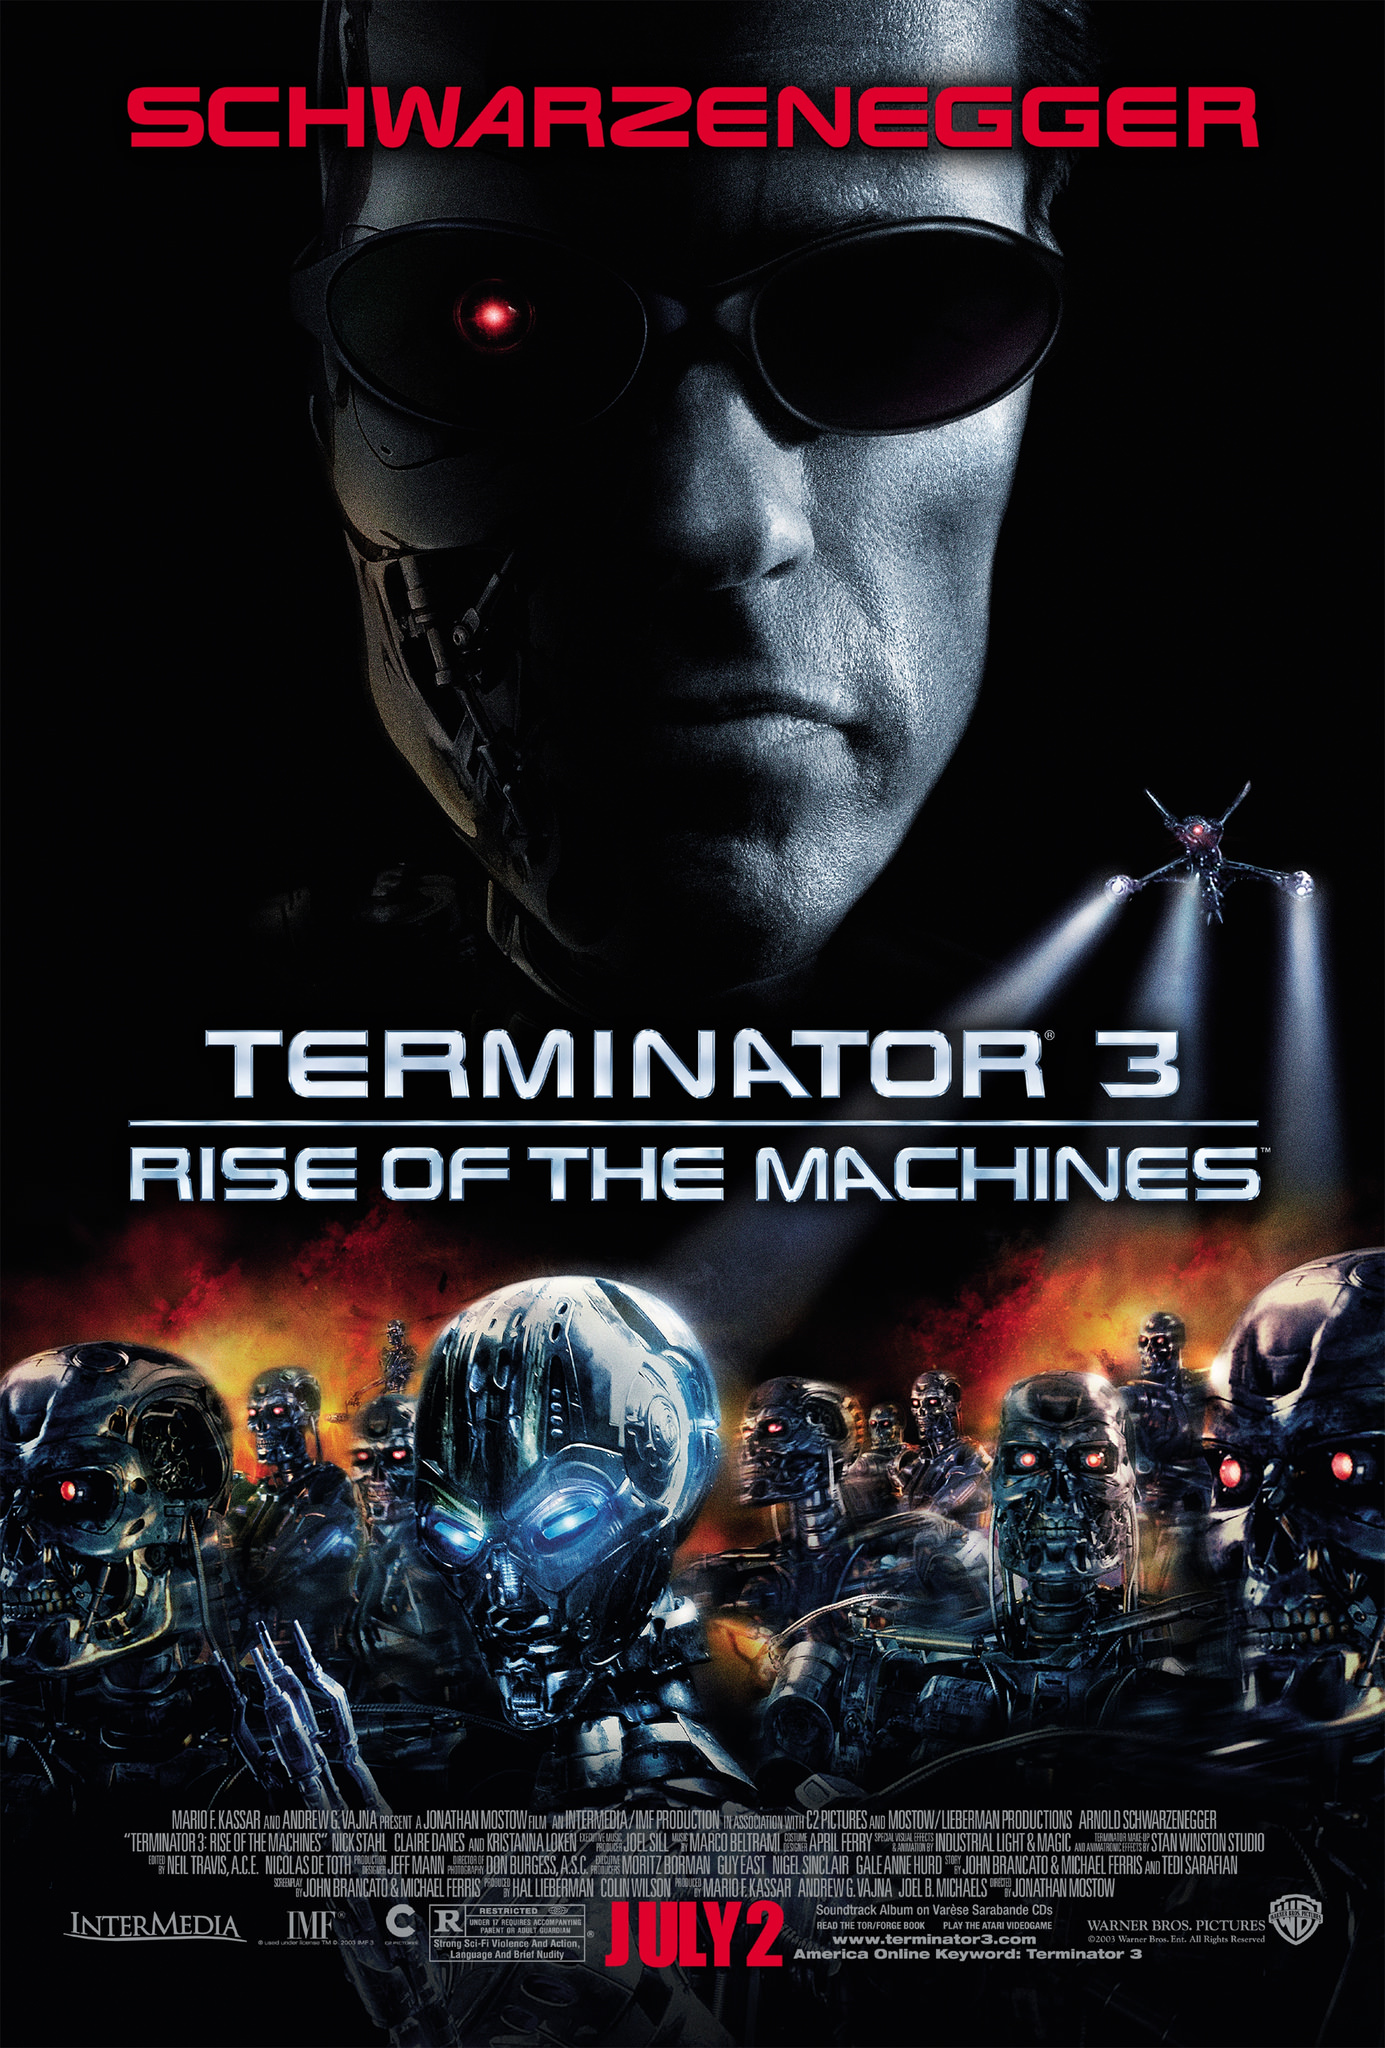 Terminator 3 soulevement machines mostow